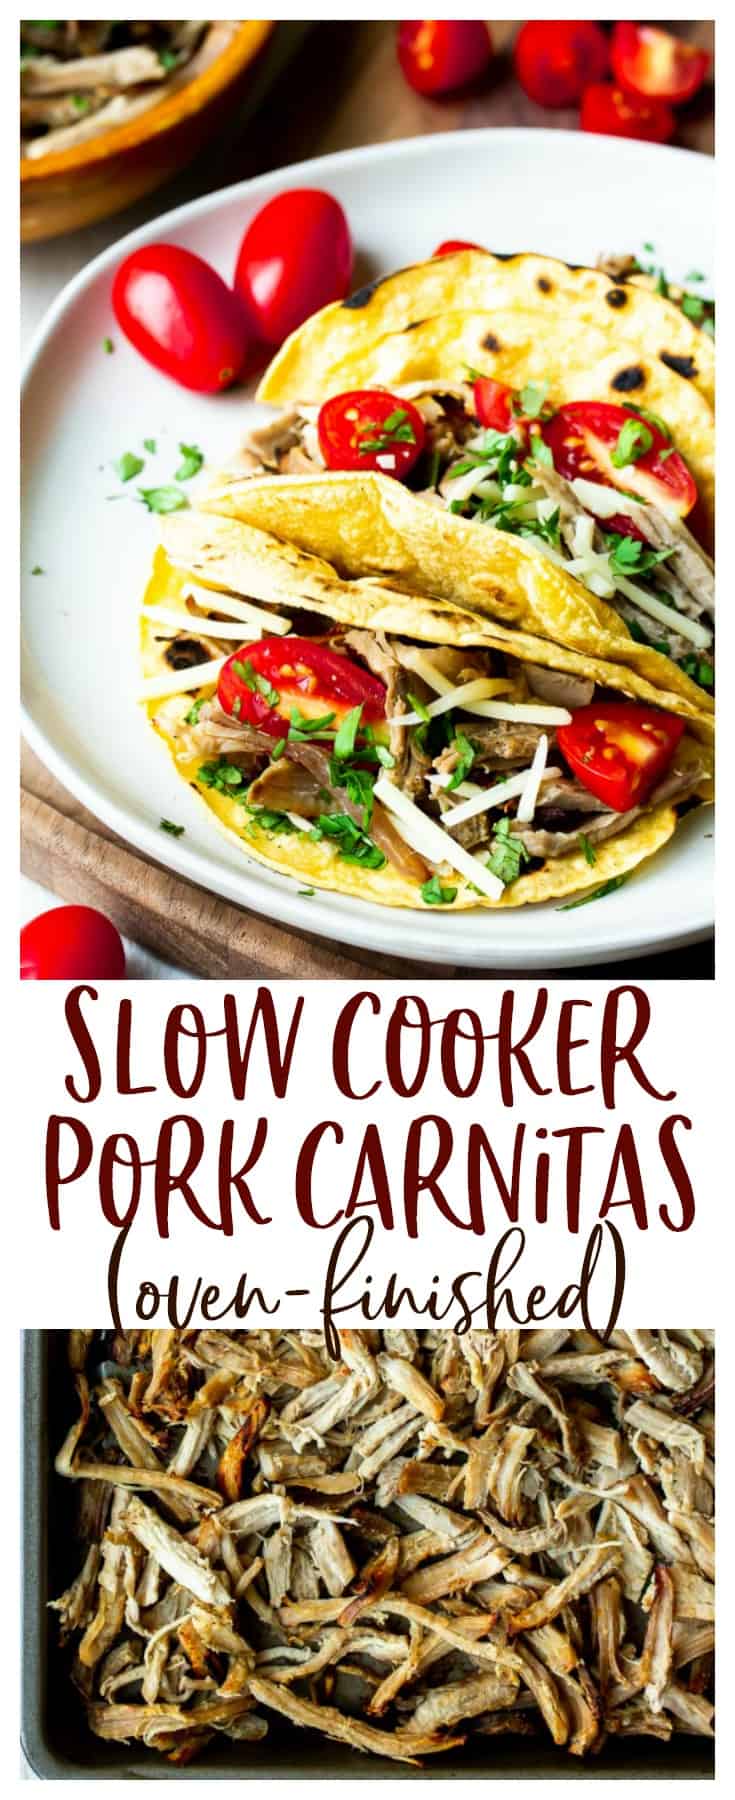 Easy Pork Carnitas Slow Cooker Recipe (Oven Finished)